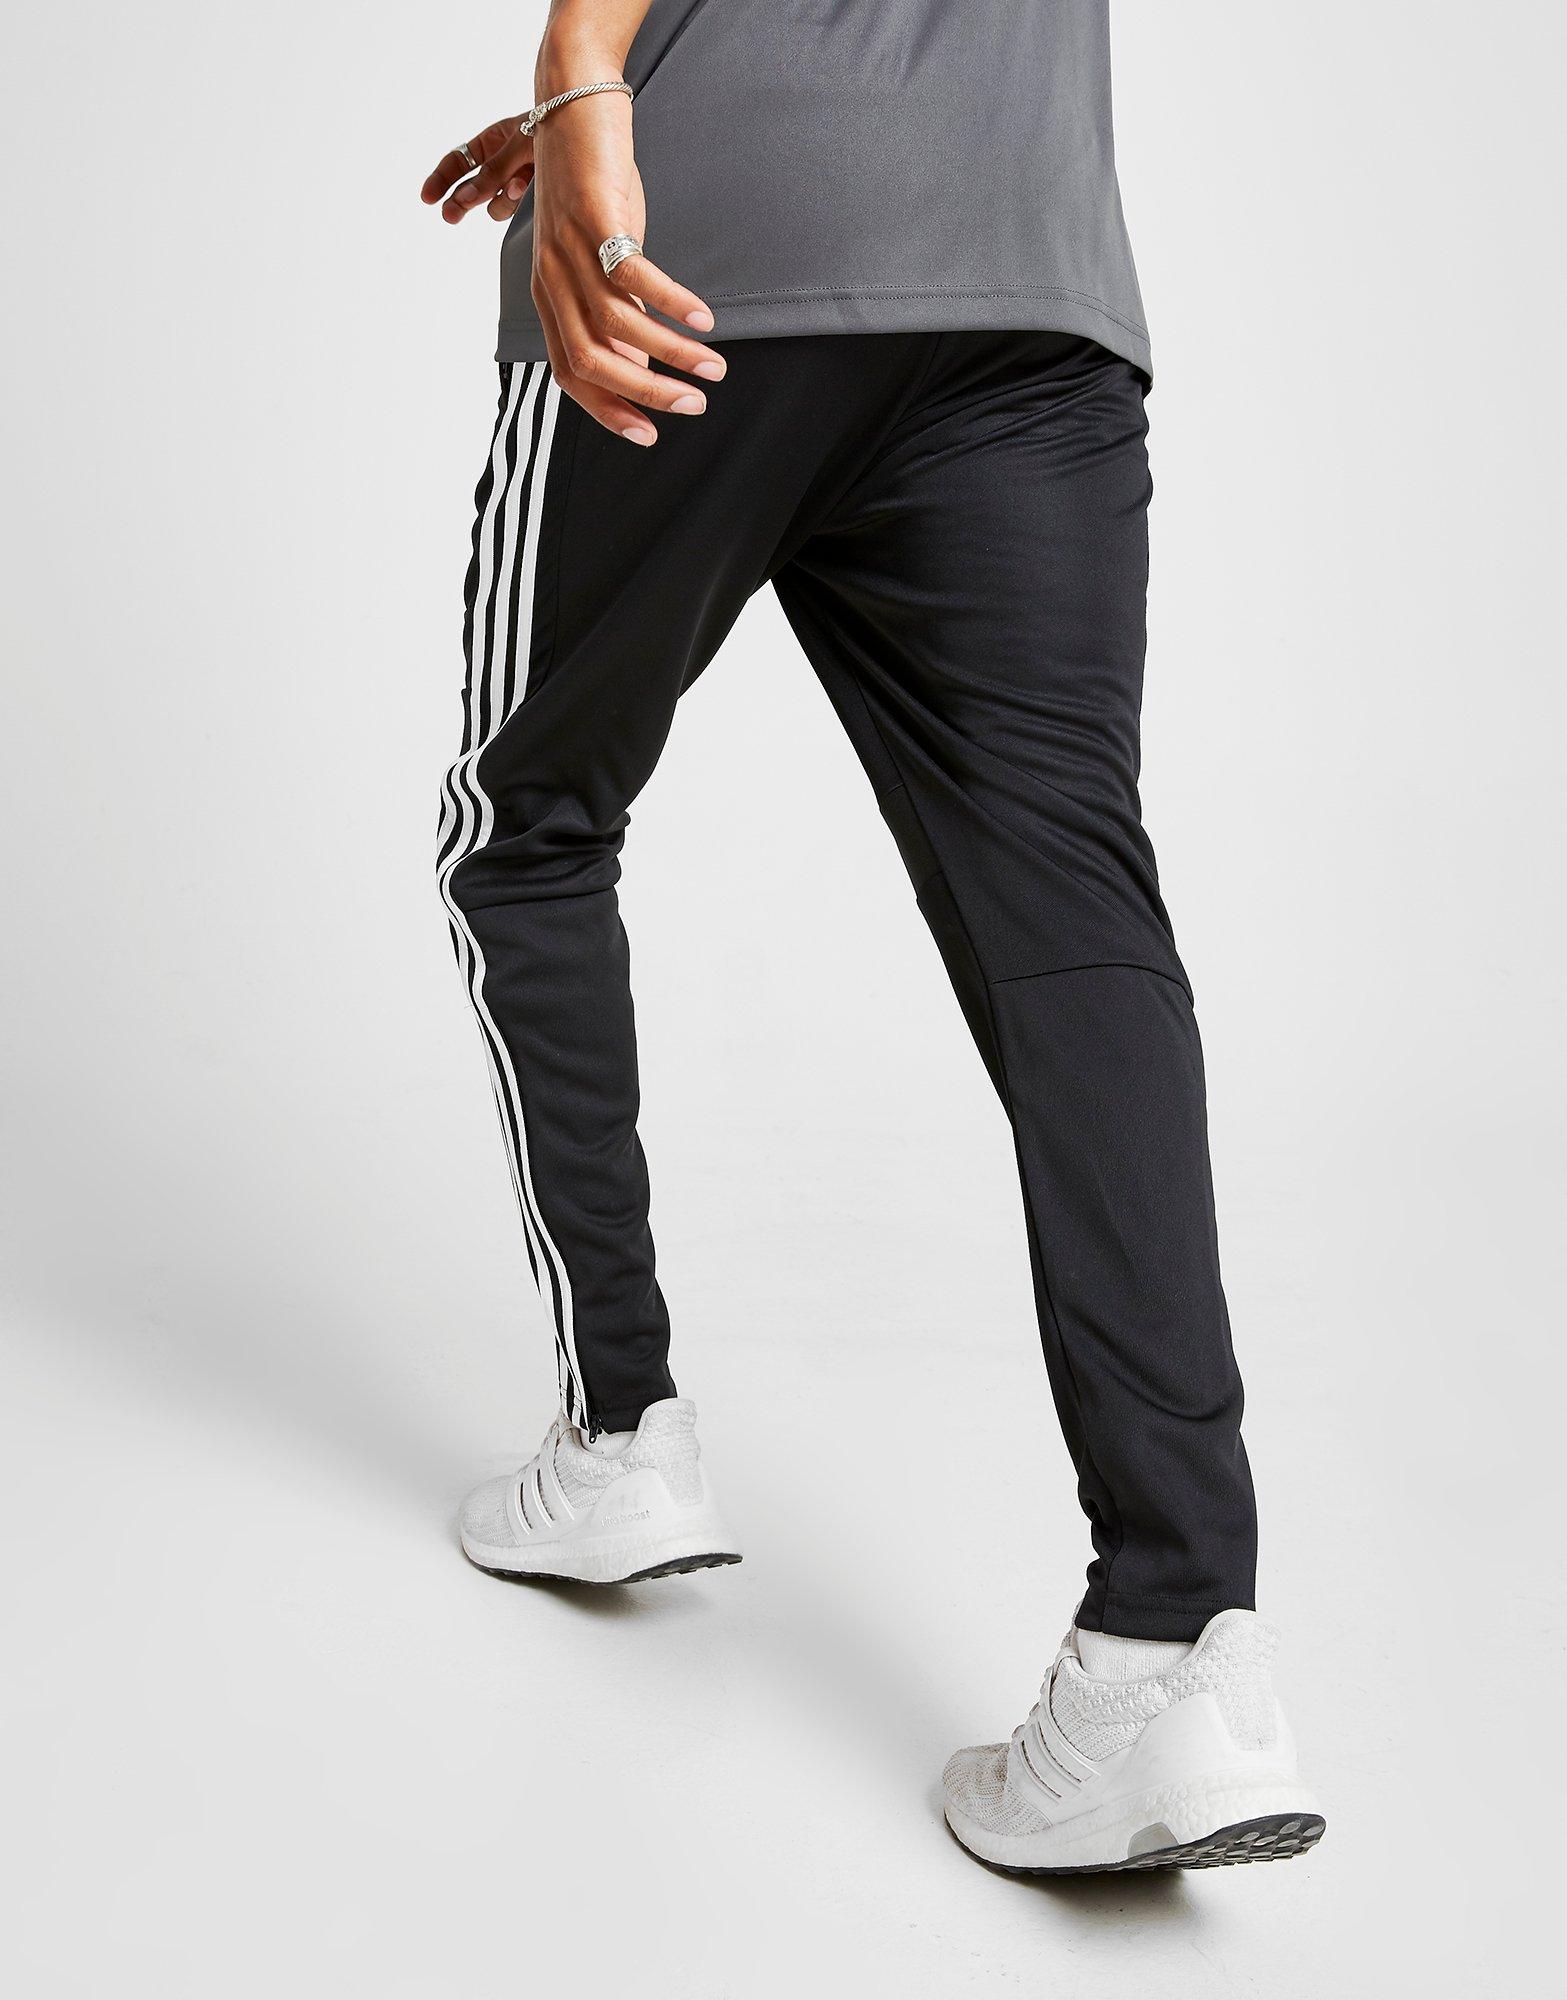 Buy Black adidas Tiro 19 Track Pants